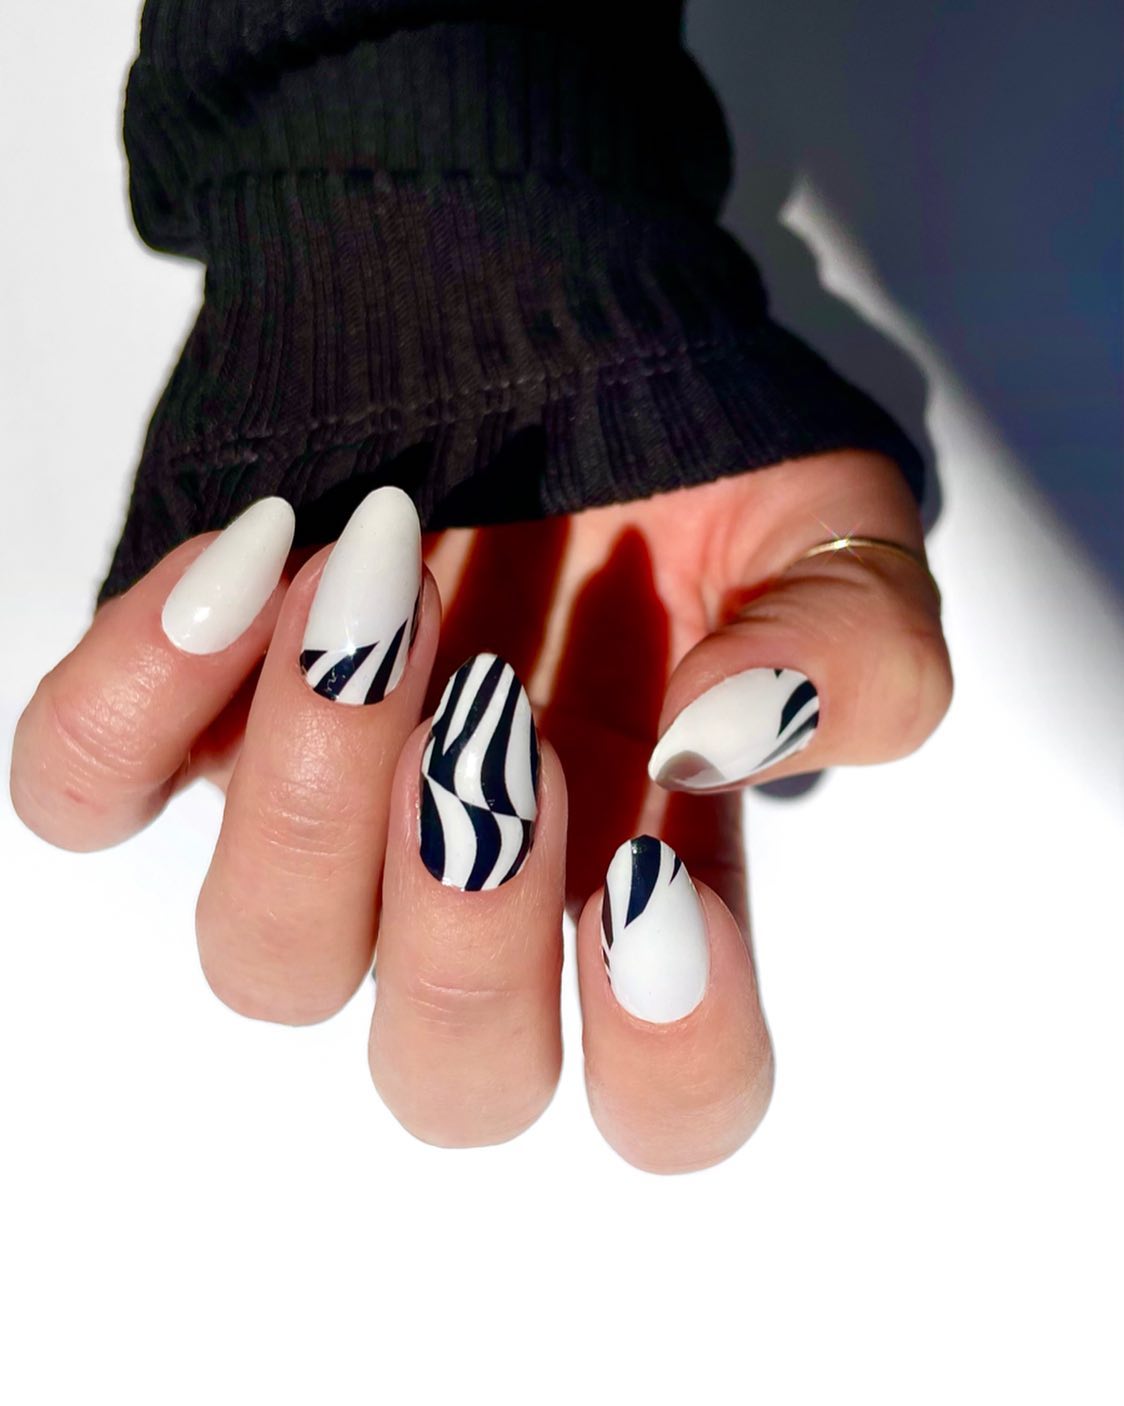 White Nails with Black Zebra Lines